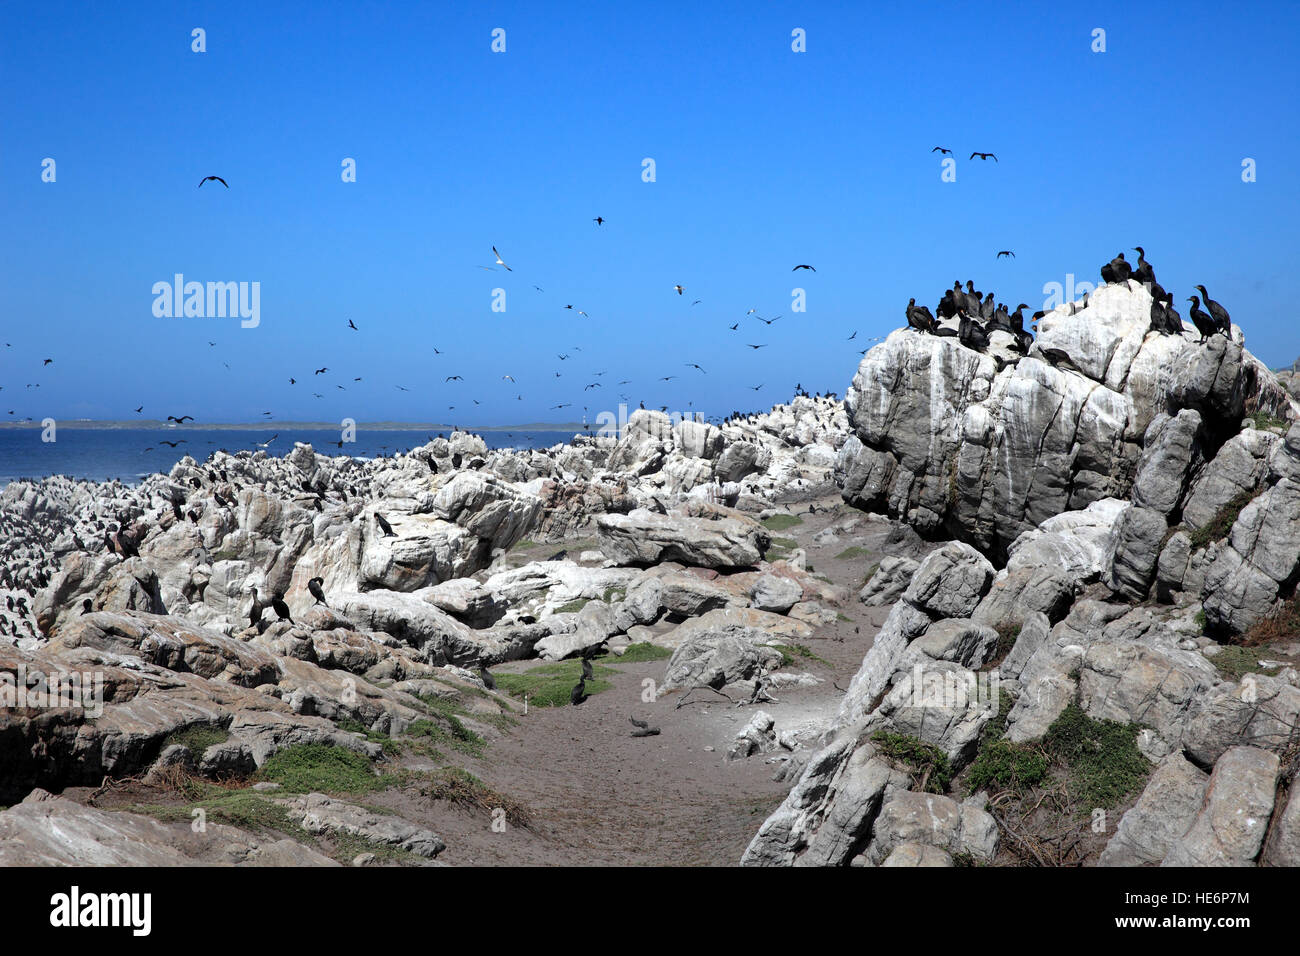 Stony Point, Kolonie von Seevögeln, Bettys Bay, Western Cape, Südafrika, Afrika Stockfoto